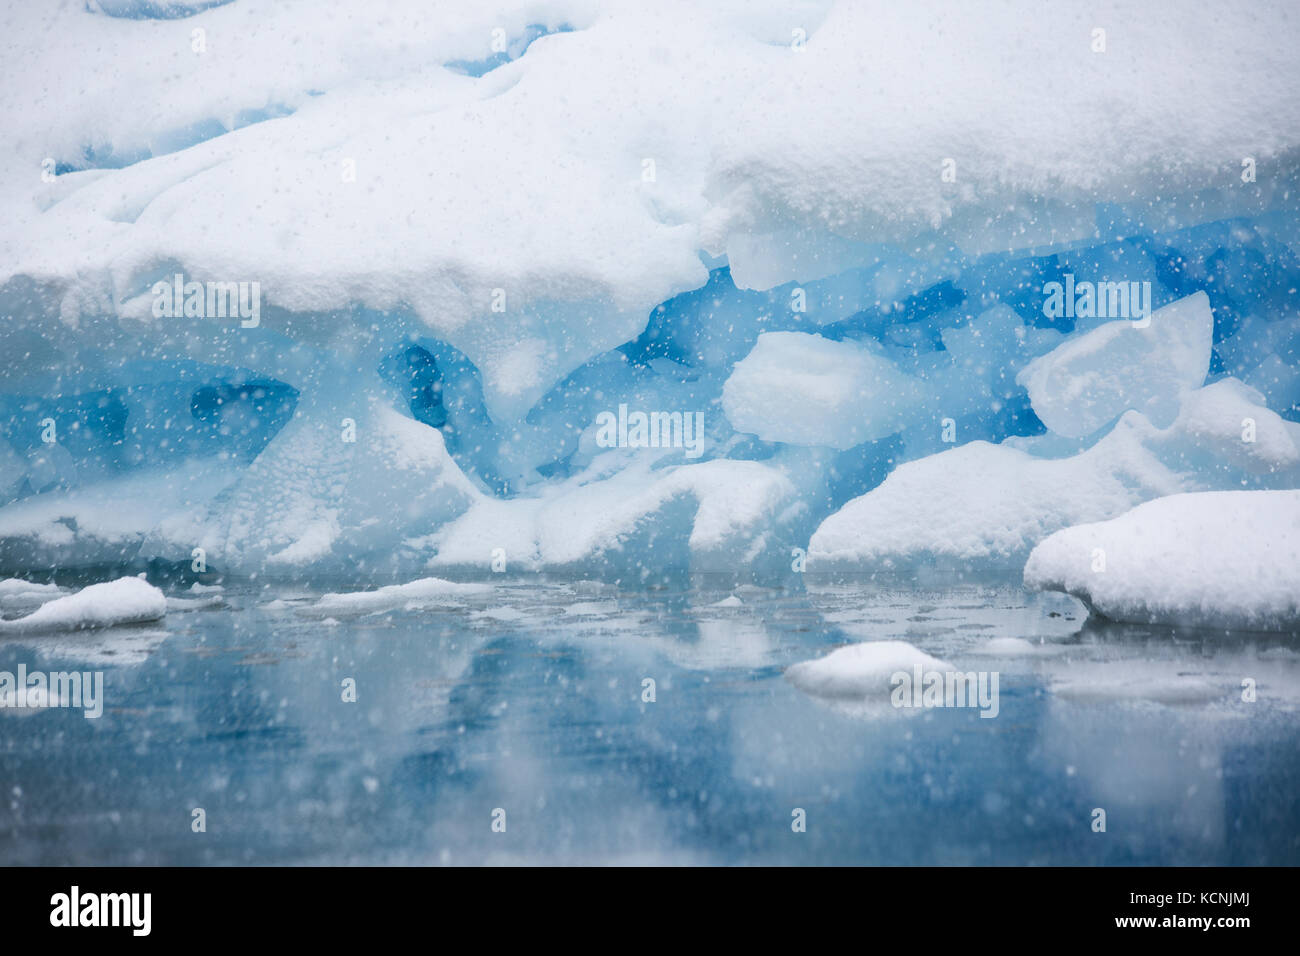 Snow falling on a grounded iceberg near Pleneau Island with its many hues of blue gives the impression of being inside a snowglobe, Pleneau Island, Antarctic  Peninsula Stock Photo